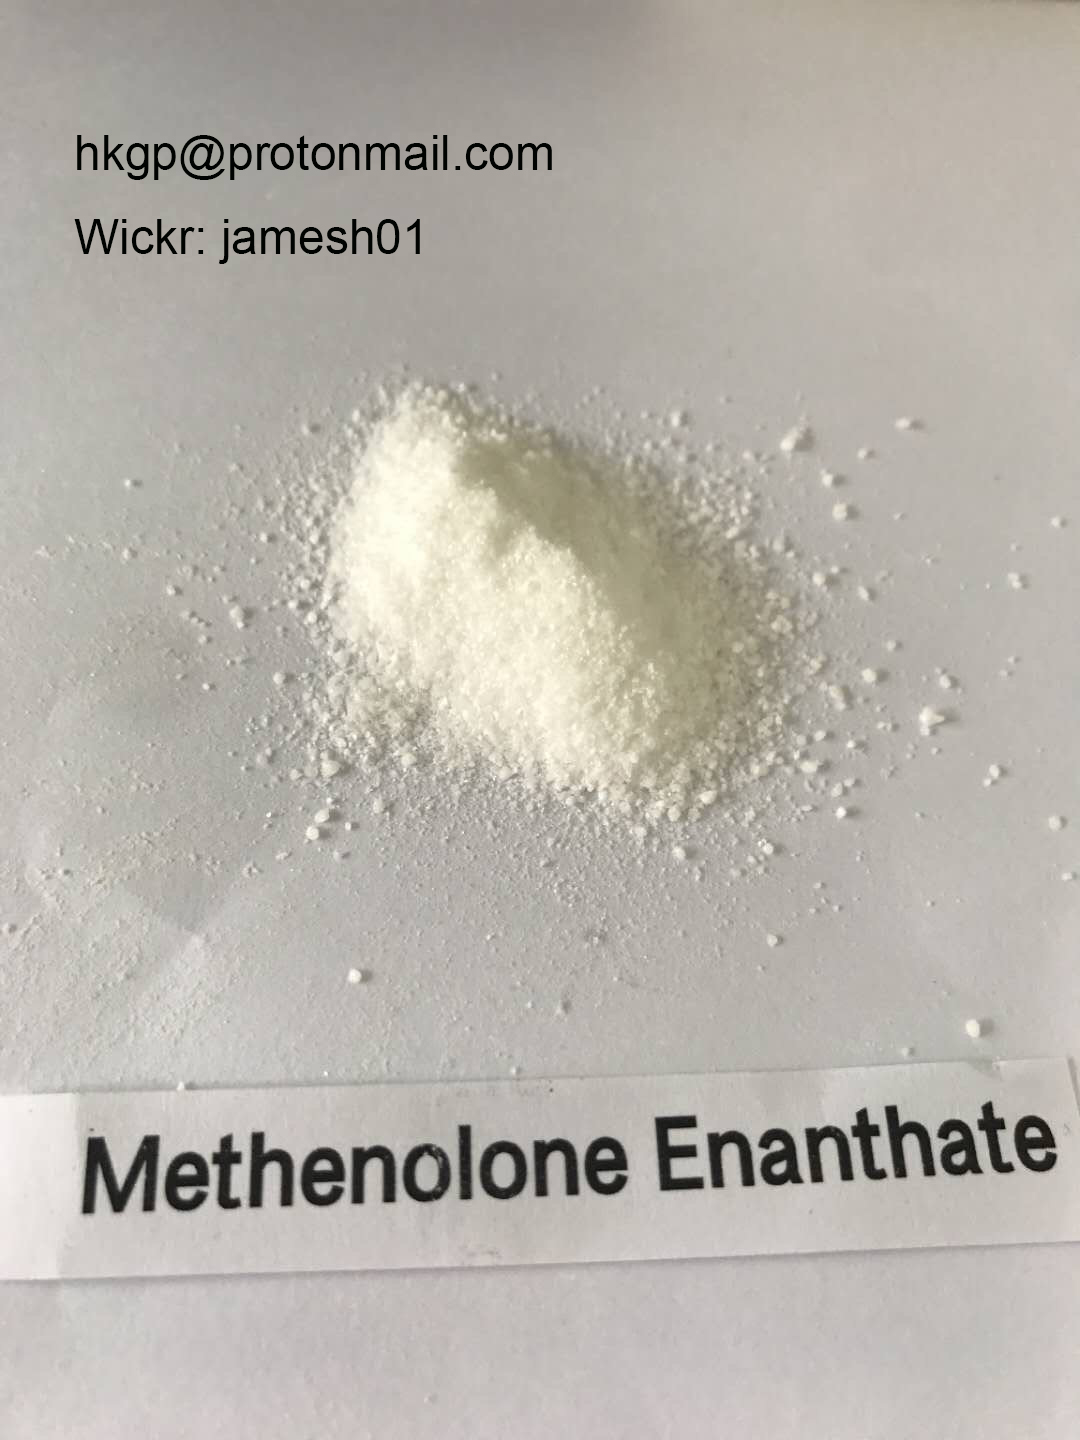 Pure methenolone enanthate powder